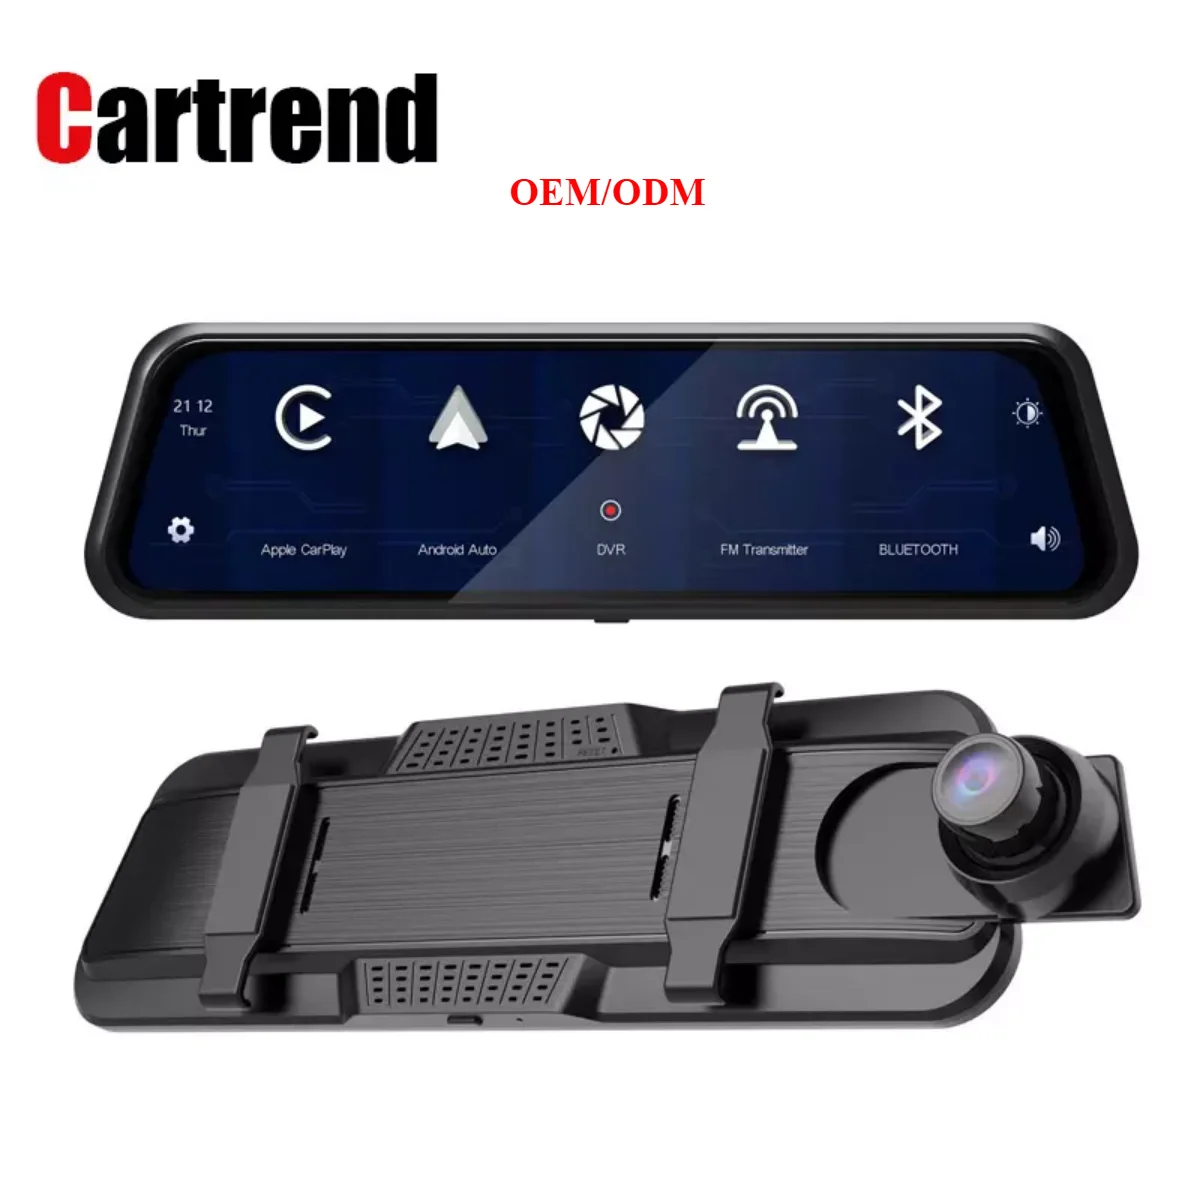 

Wireless Apple Carplay interface Car Streaming Rear View Mirror 9.66 inch Dash Cam DVR Camera 2K Auto Registrar Video Recorder